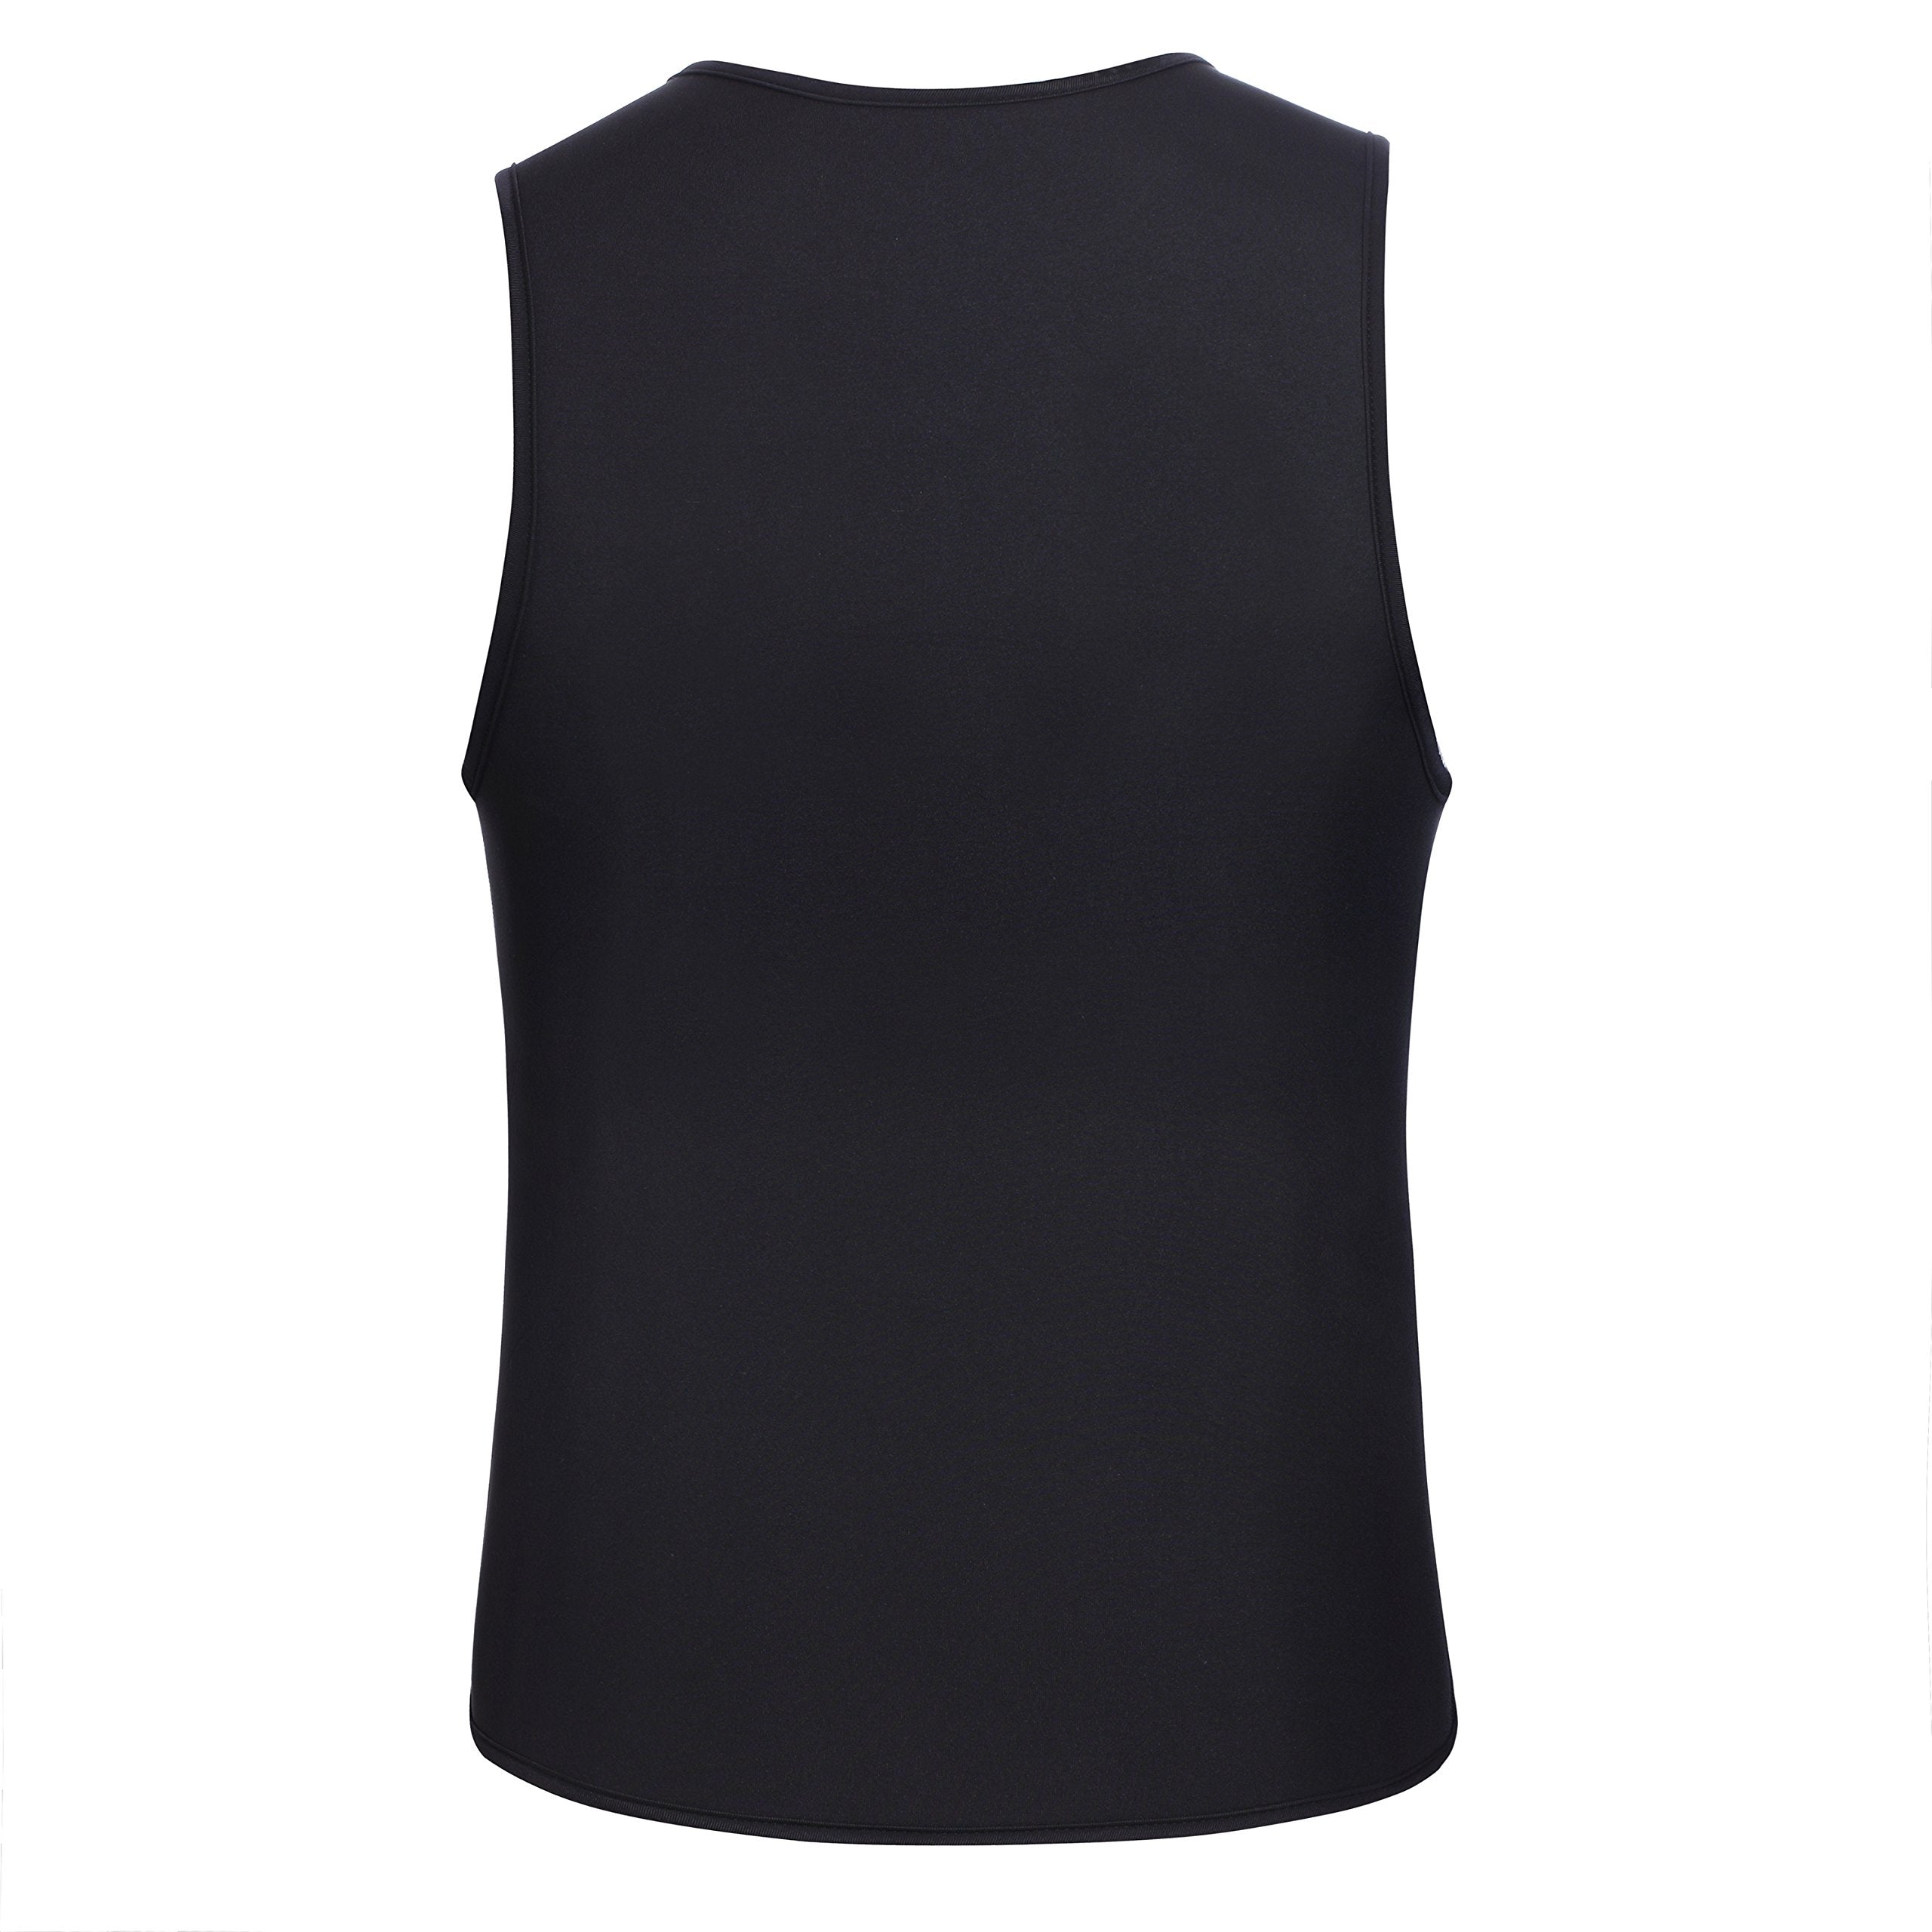 Men Waist Trainer Vest for Weightloss Hot Neoprene Corset Body Shaper Zipper Sauna Tank Top Workout Shirt (L, Black Neoprene Slimming Vest)